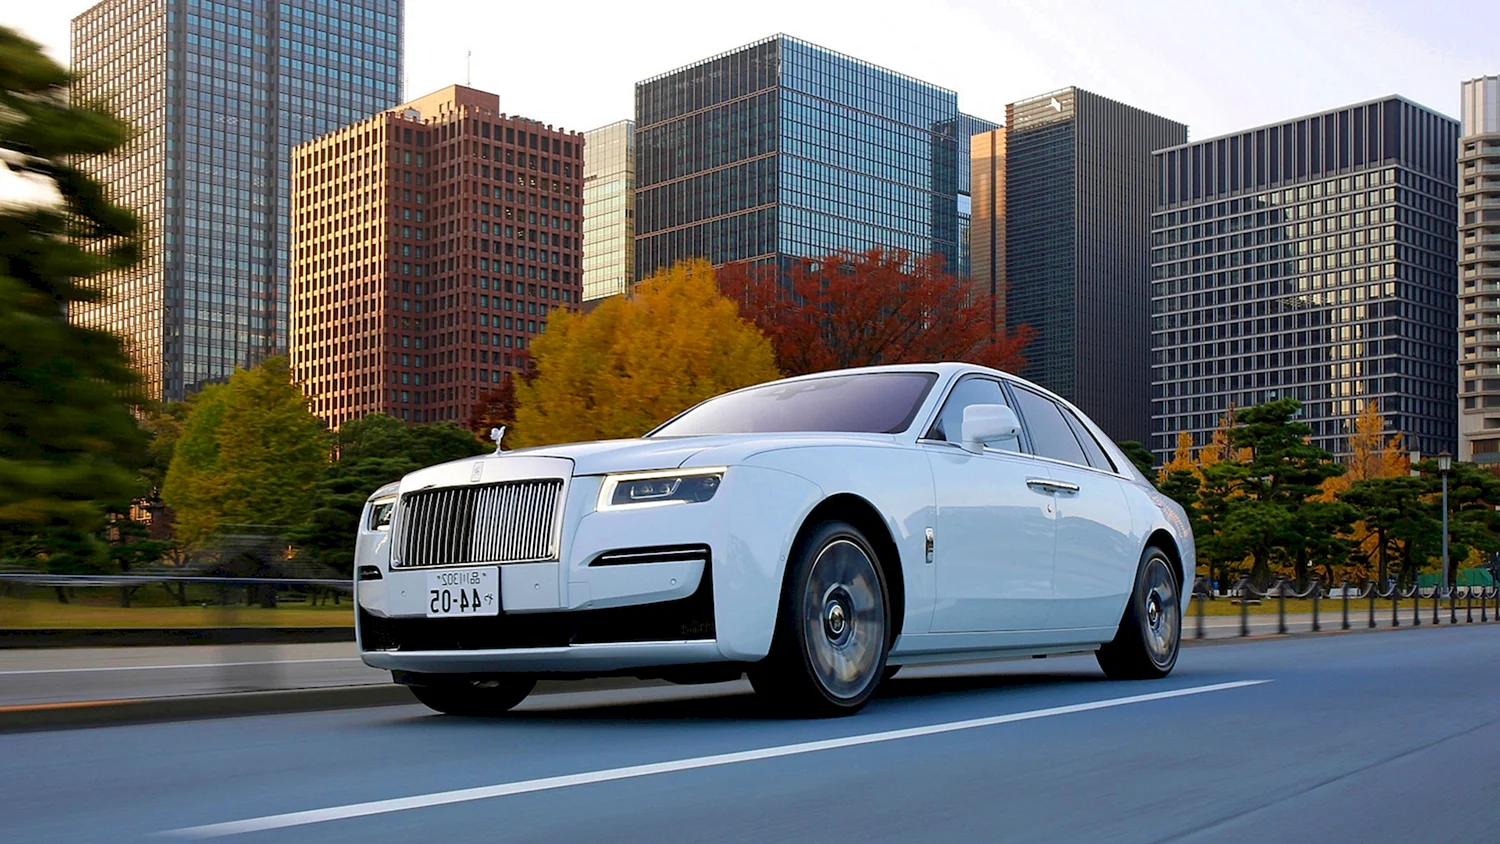 Новый Rolls Royce Ghost 2021